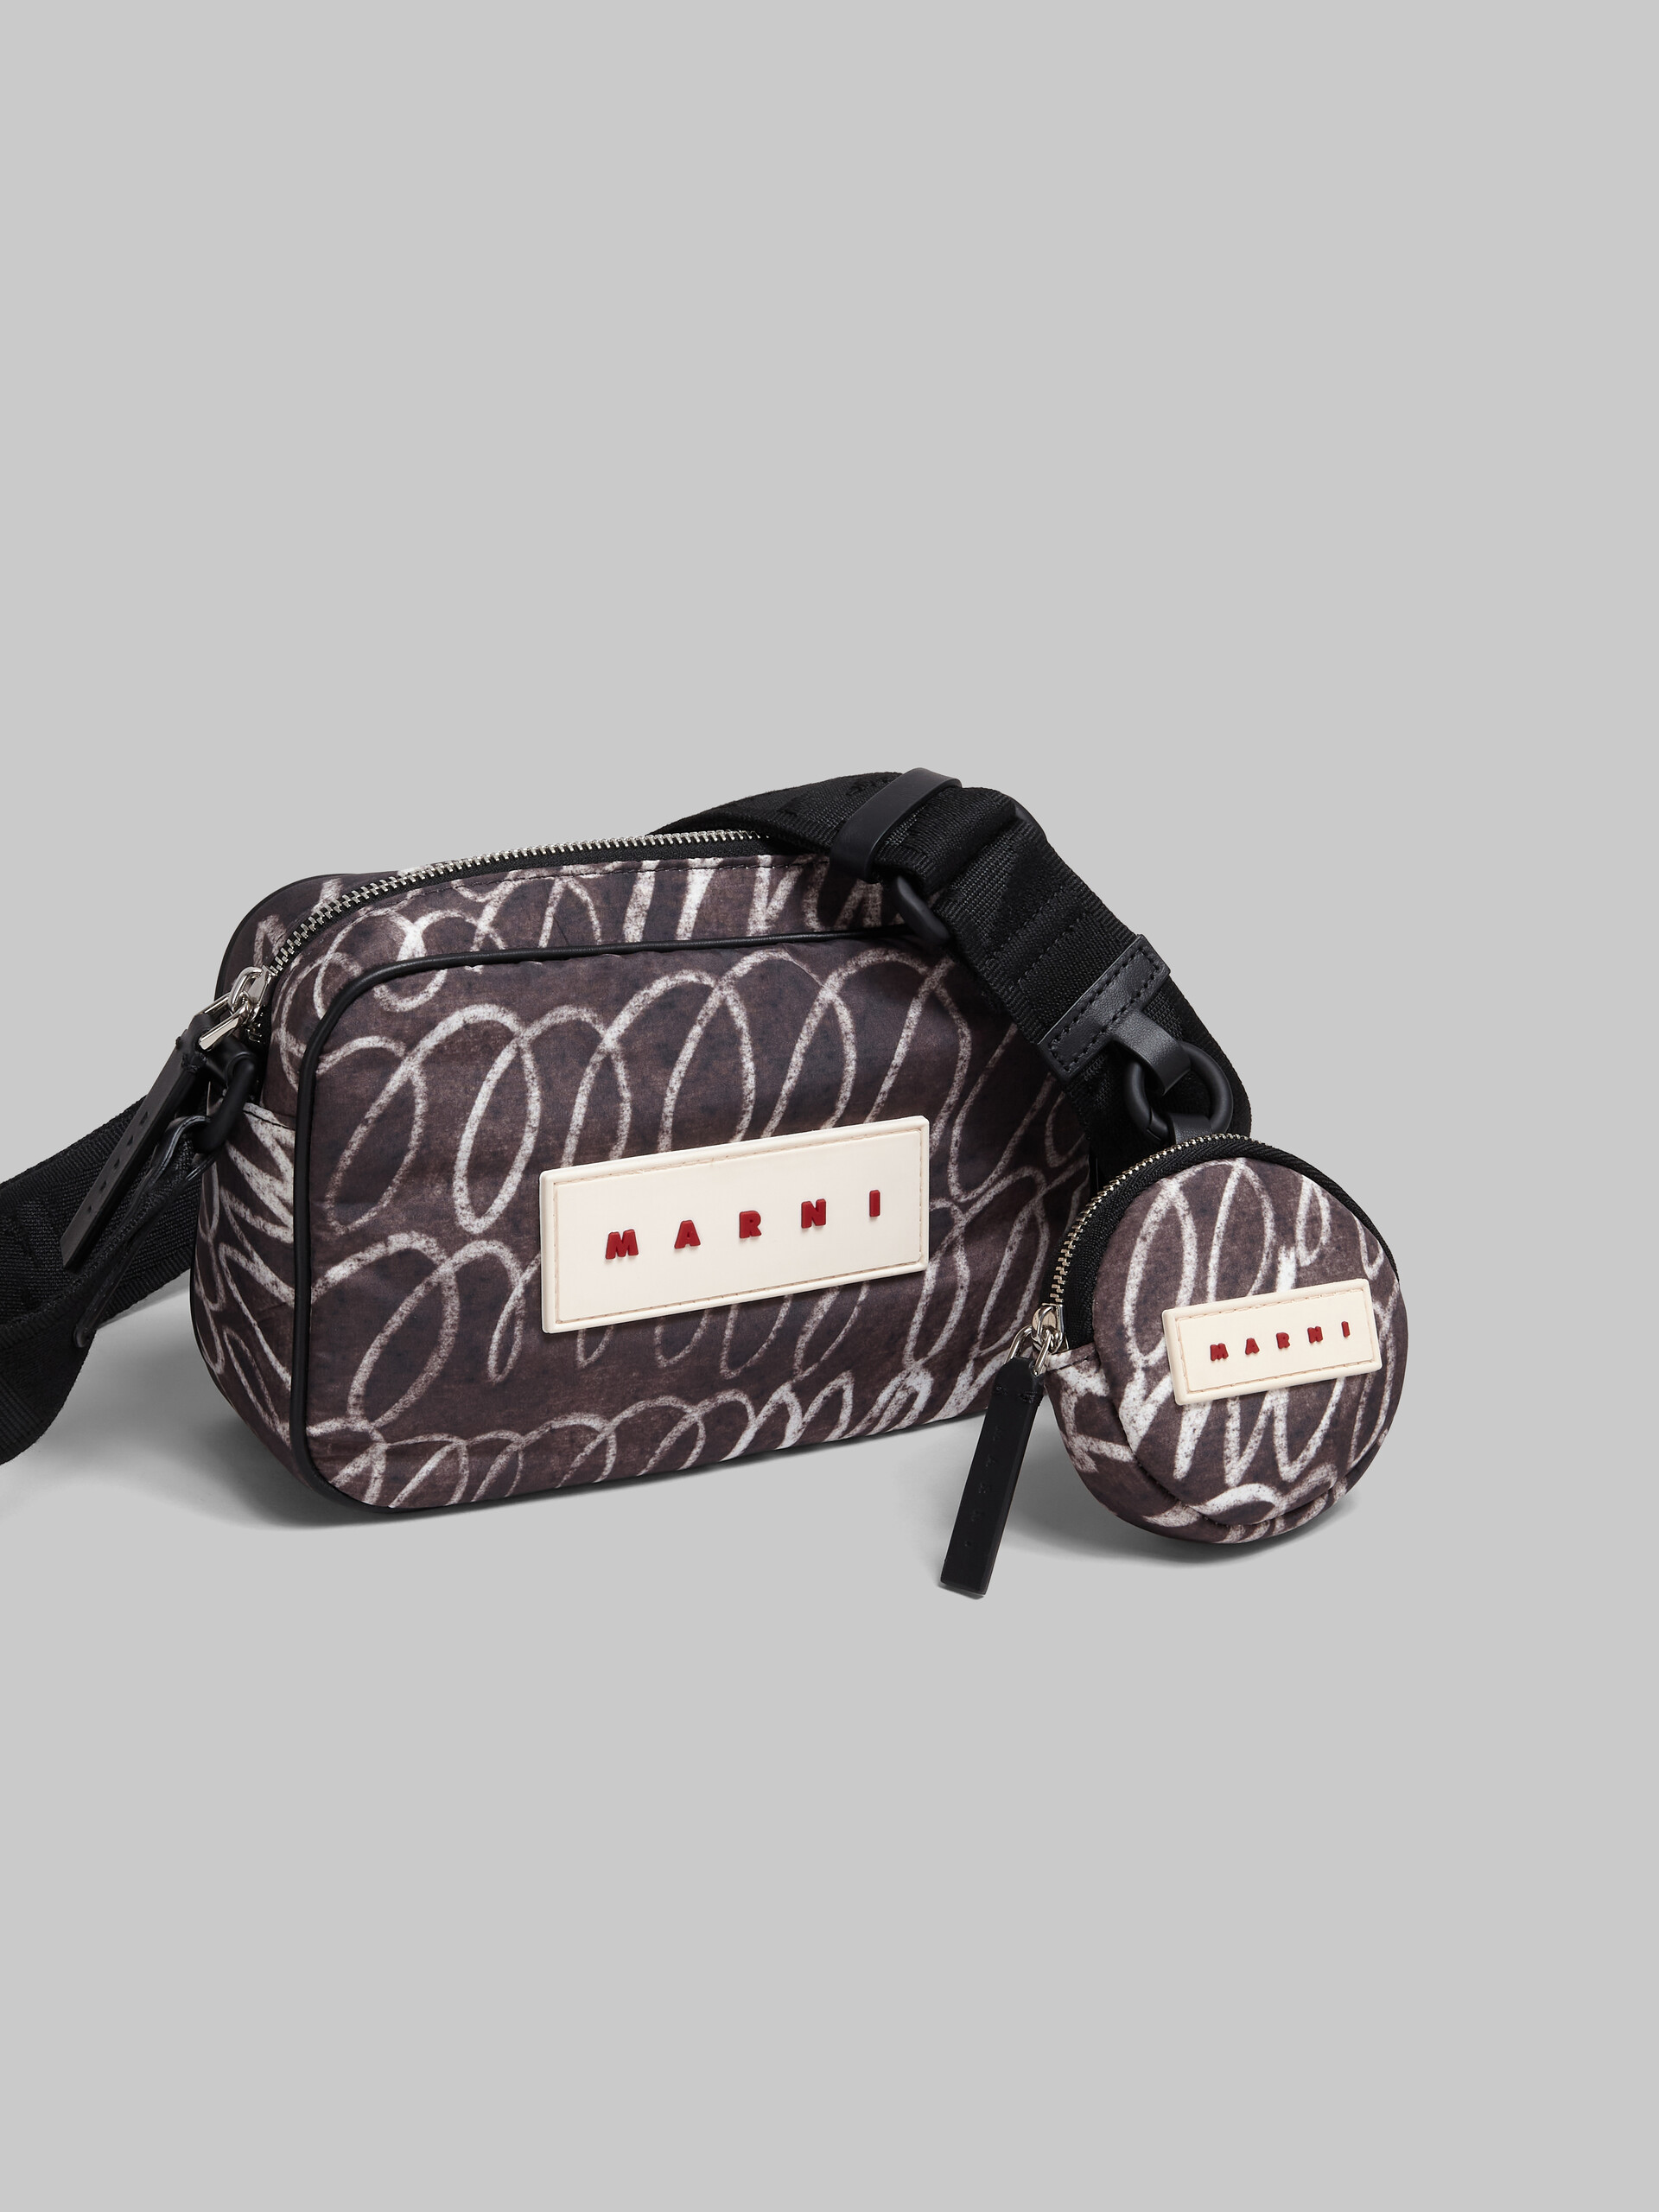 Bolso para cámara Puff negro con estampado Marni Scribble - Bolsos de hombro - Image 5